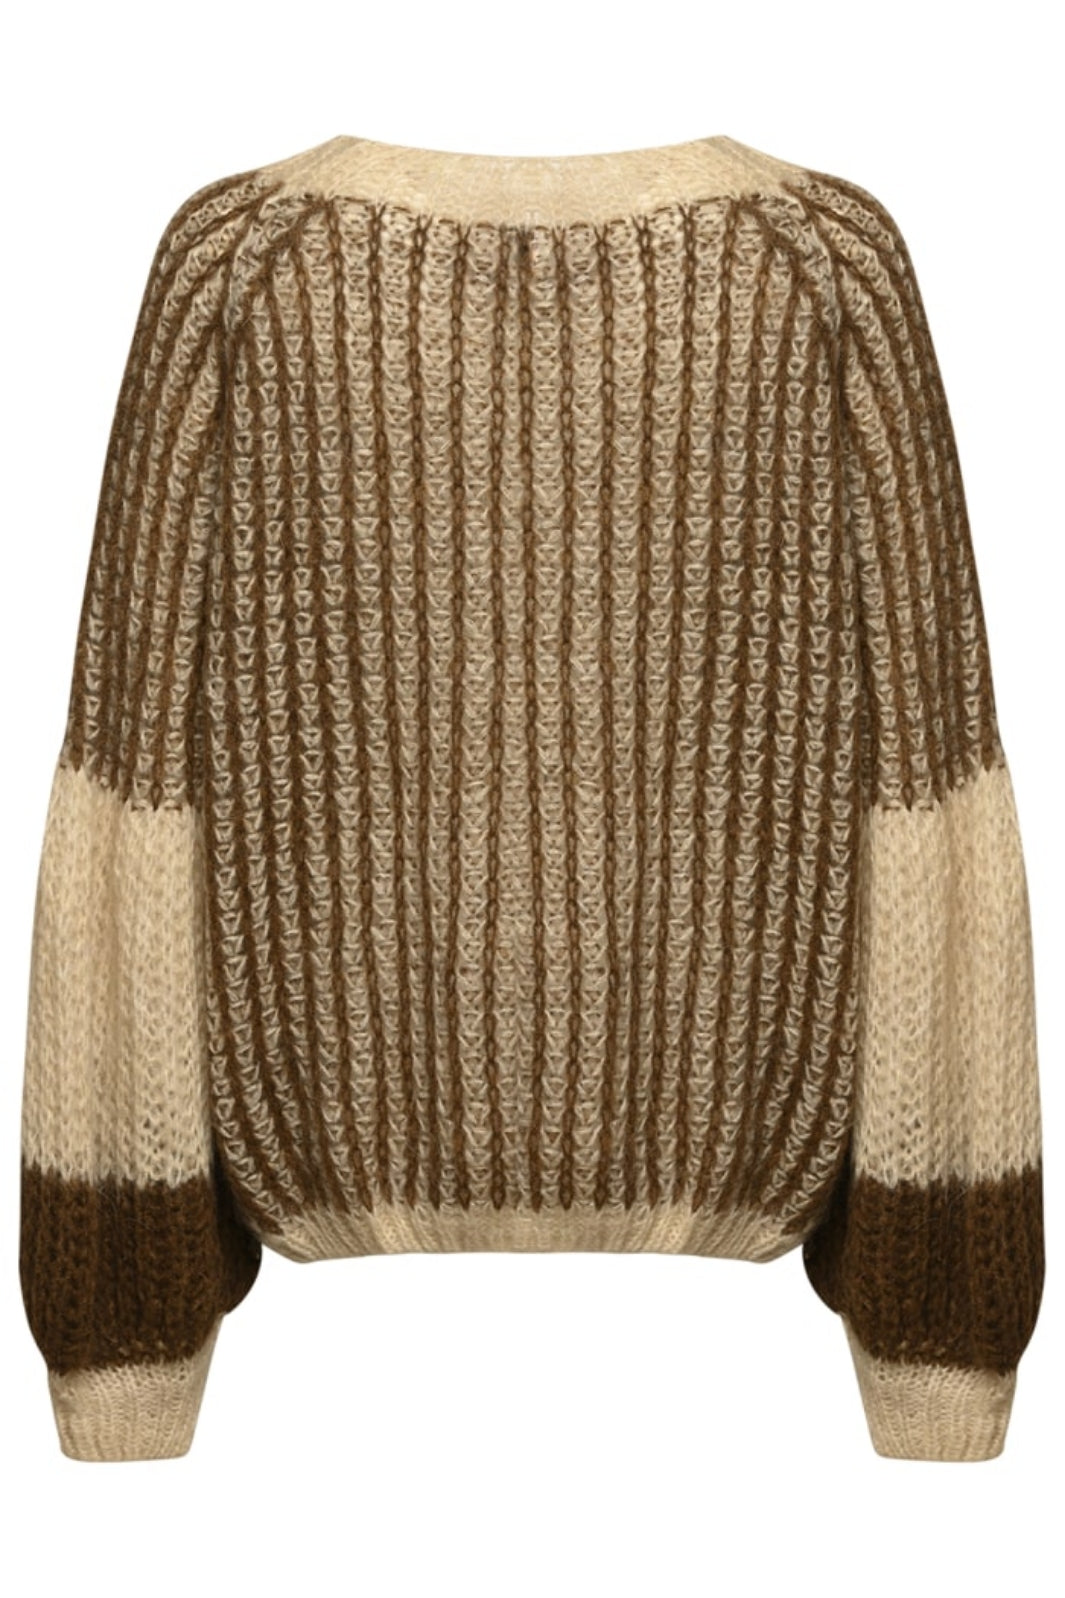 Noella - Liana Knit Sweater - Beige/Brown Strikbluser 